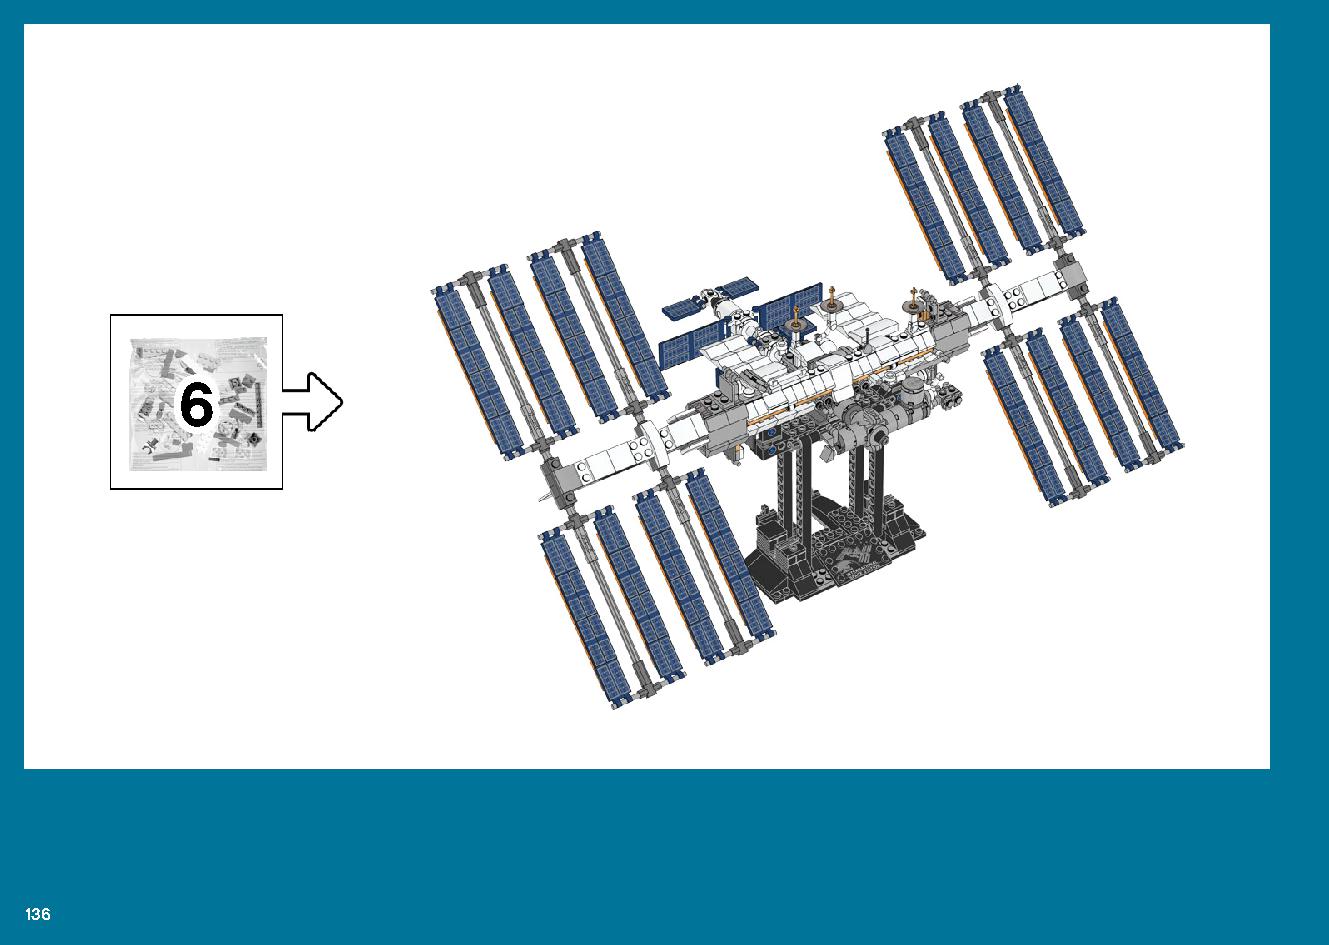 International Space Station 21321 レゴの商品情報 レゴの説明書・組立方法 136 page